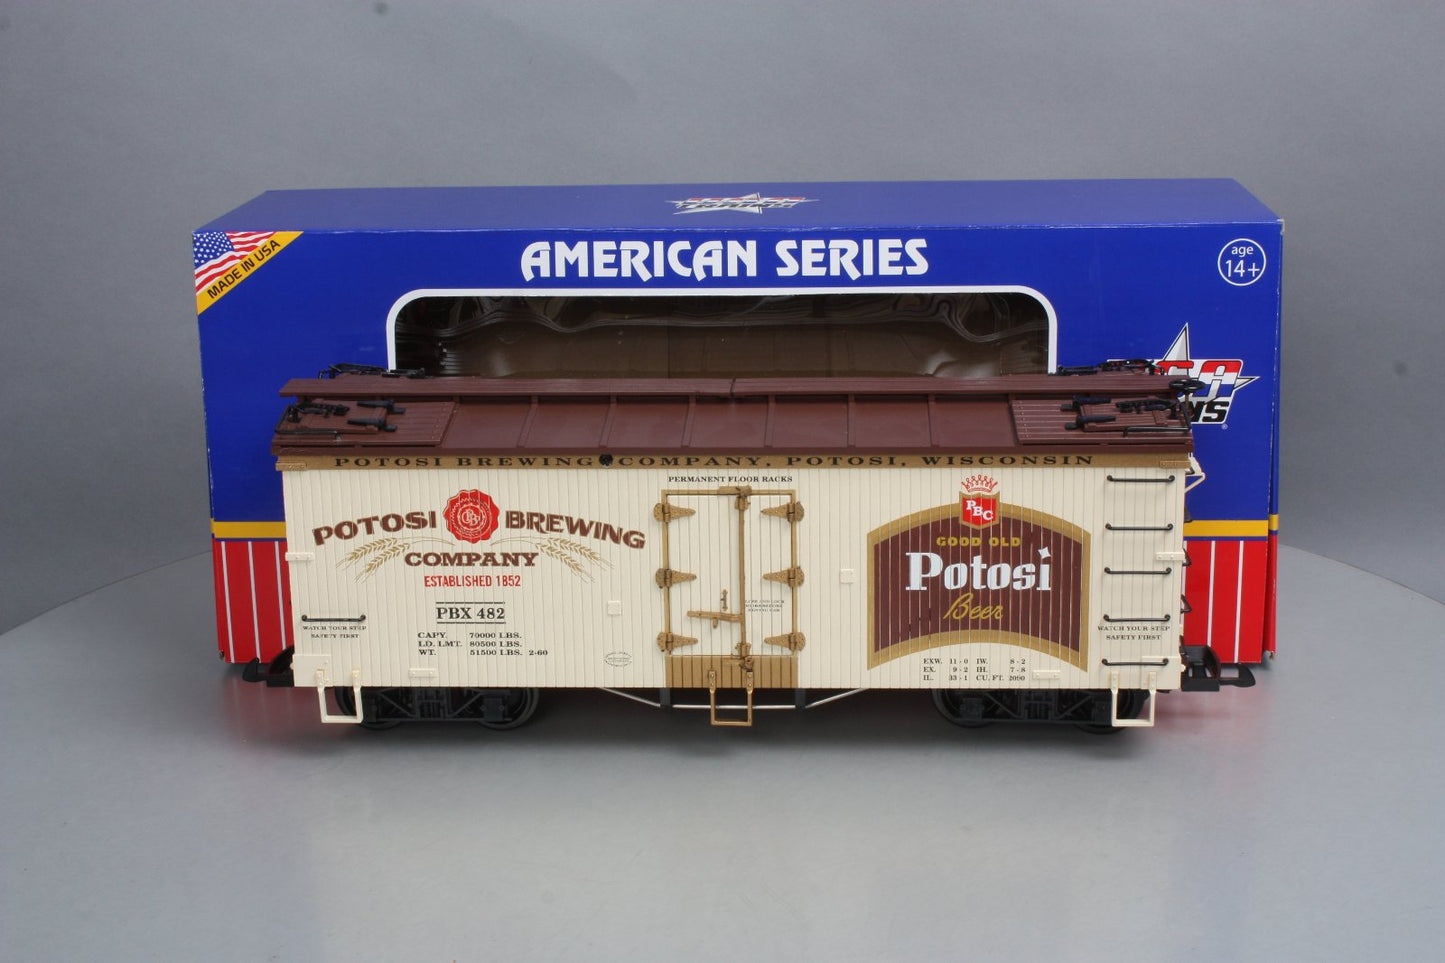 USA Trains R16410 G Scale Potosi Brewing Refrigerator Car